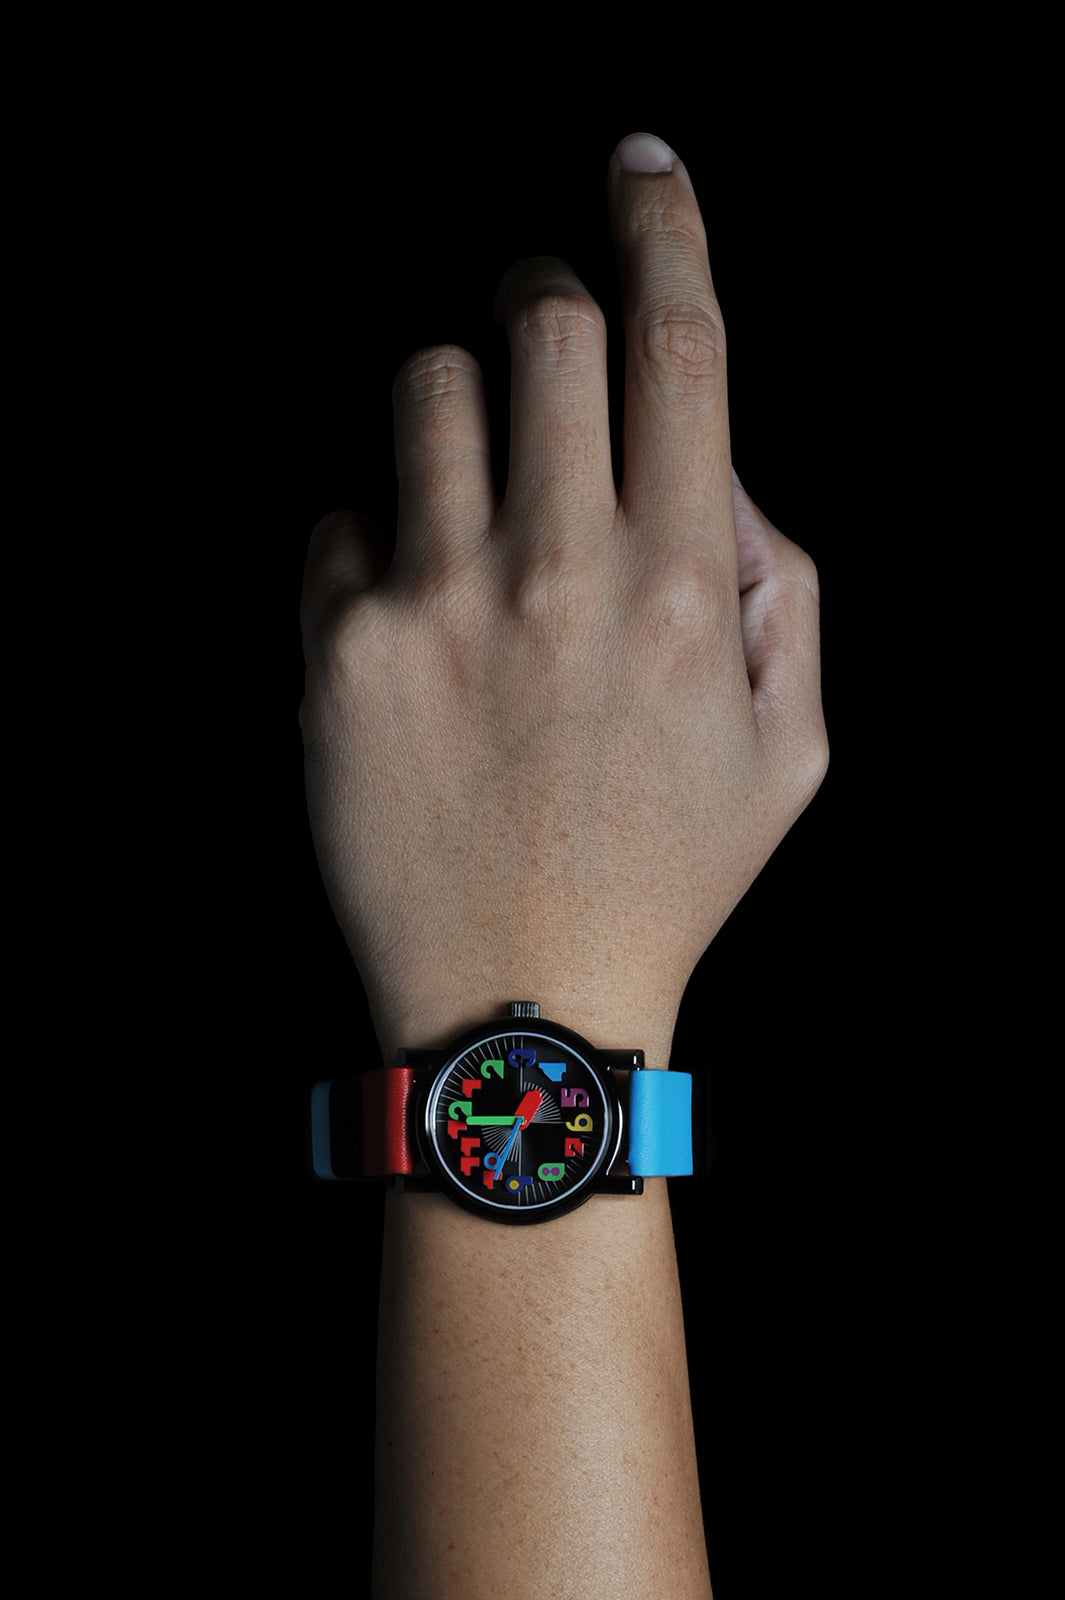 M/M Paris x Anicorn "2" collection - Timepiece "2LAZY" (100pcs worldwide)